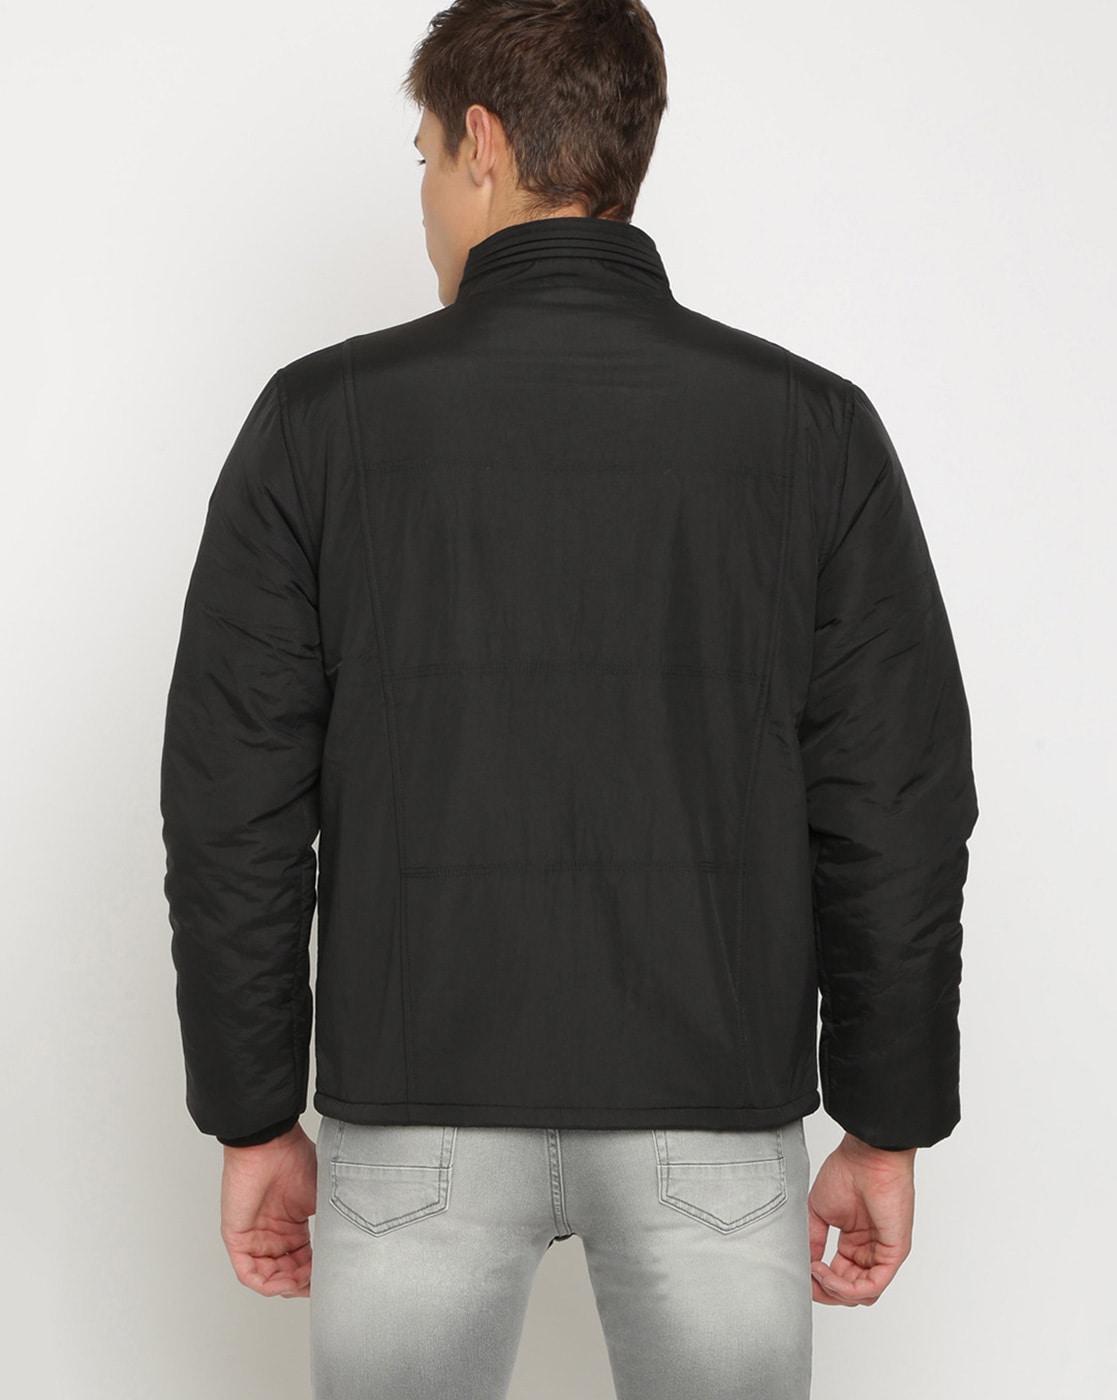 Crocodile Garments Jacket Men's XL Black Vintage Lined Pockets